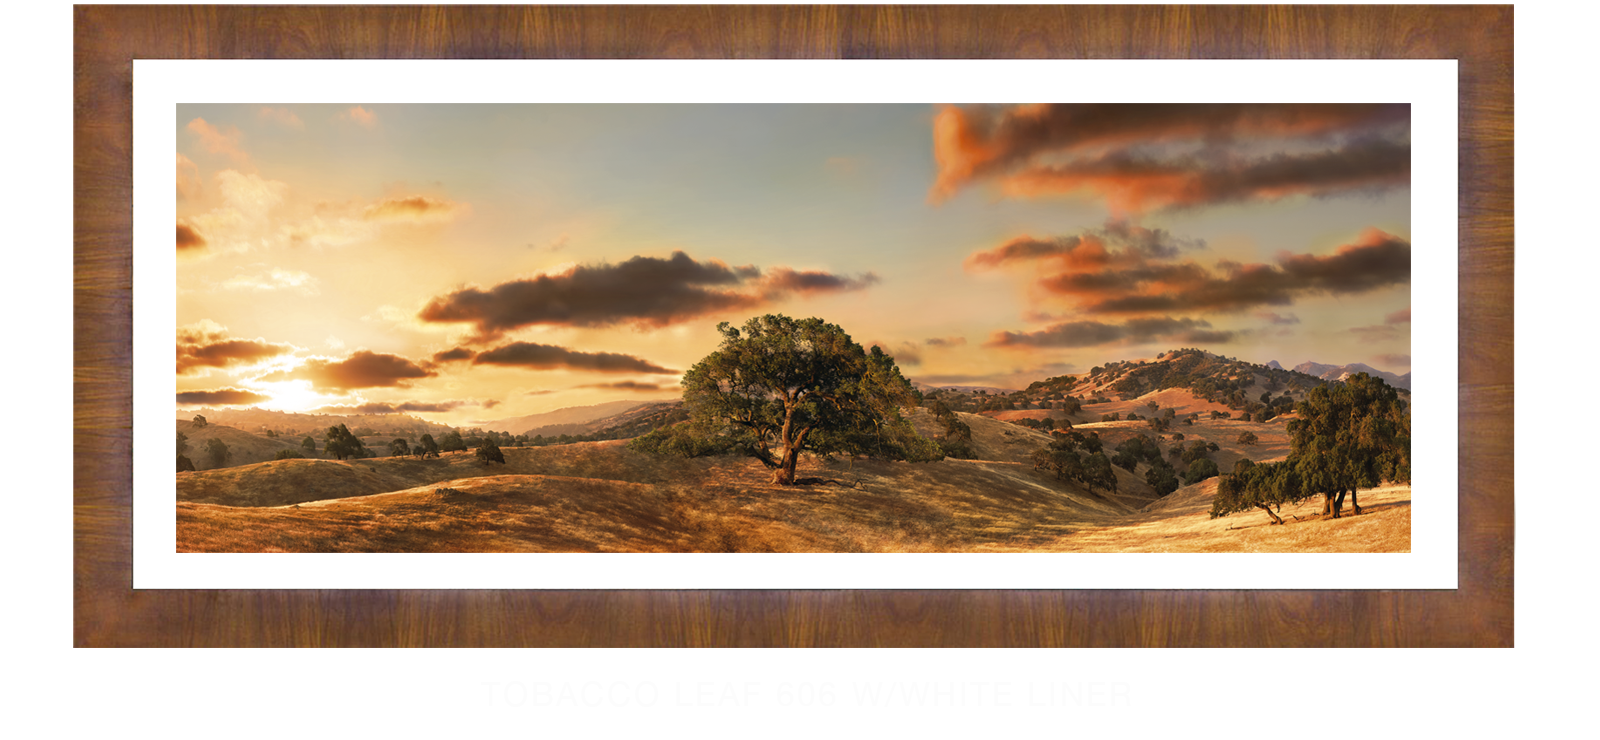 24OAKS Tobacco Leaf 606 w_Wht Liner T